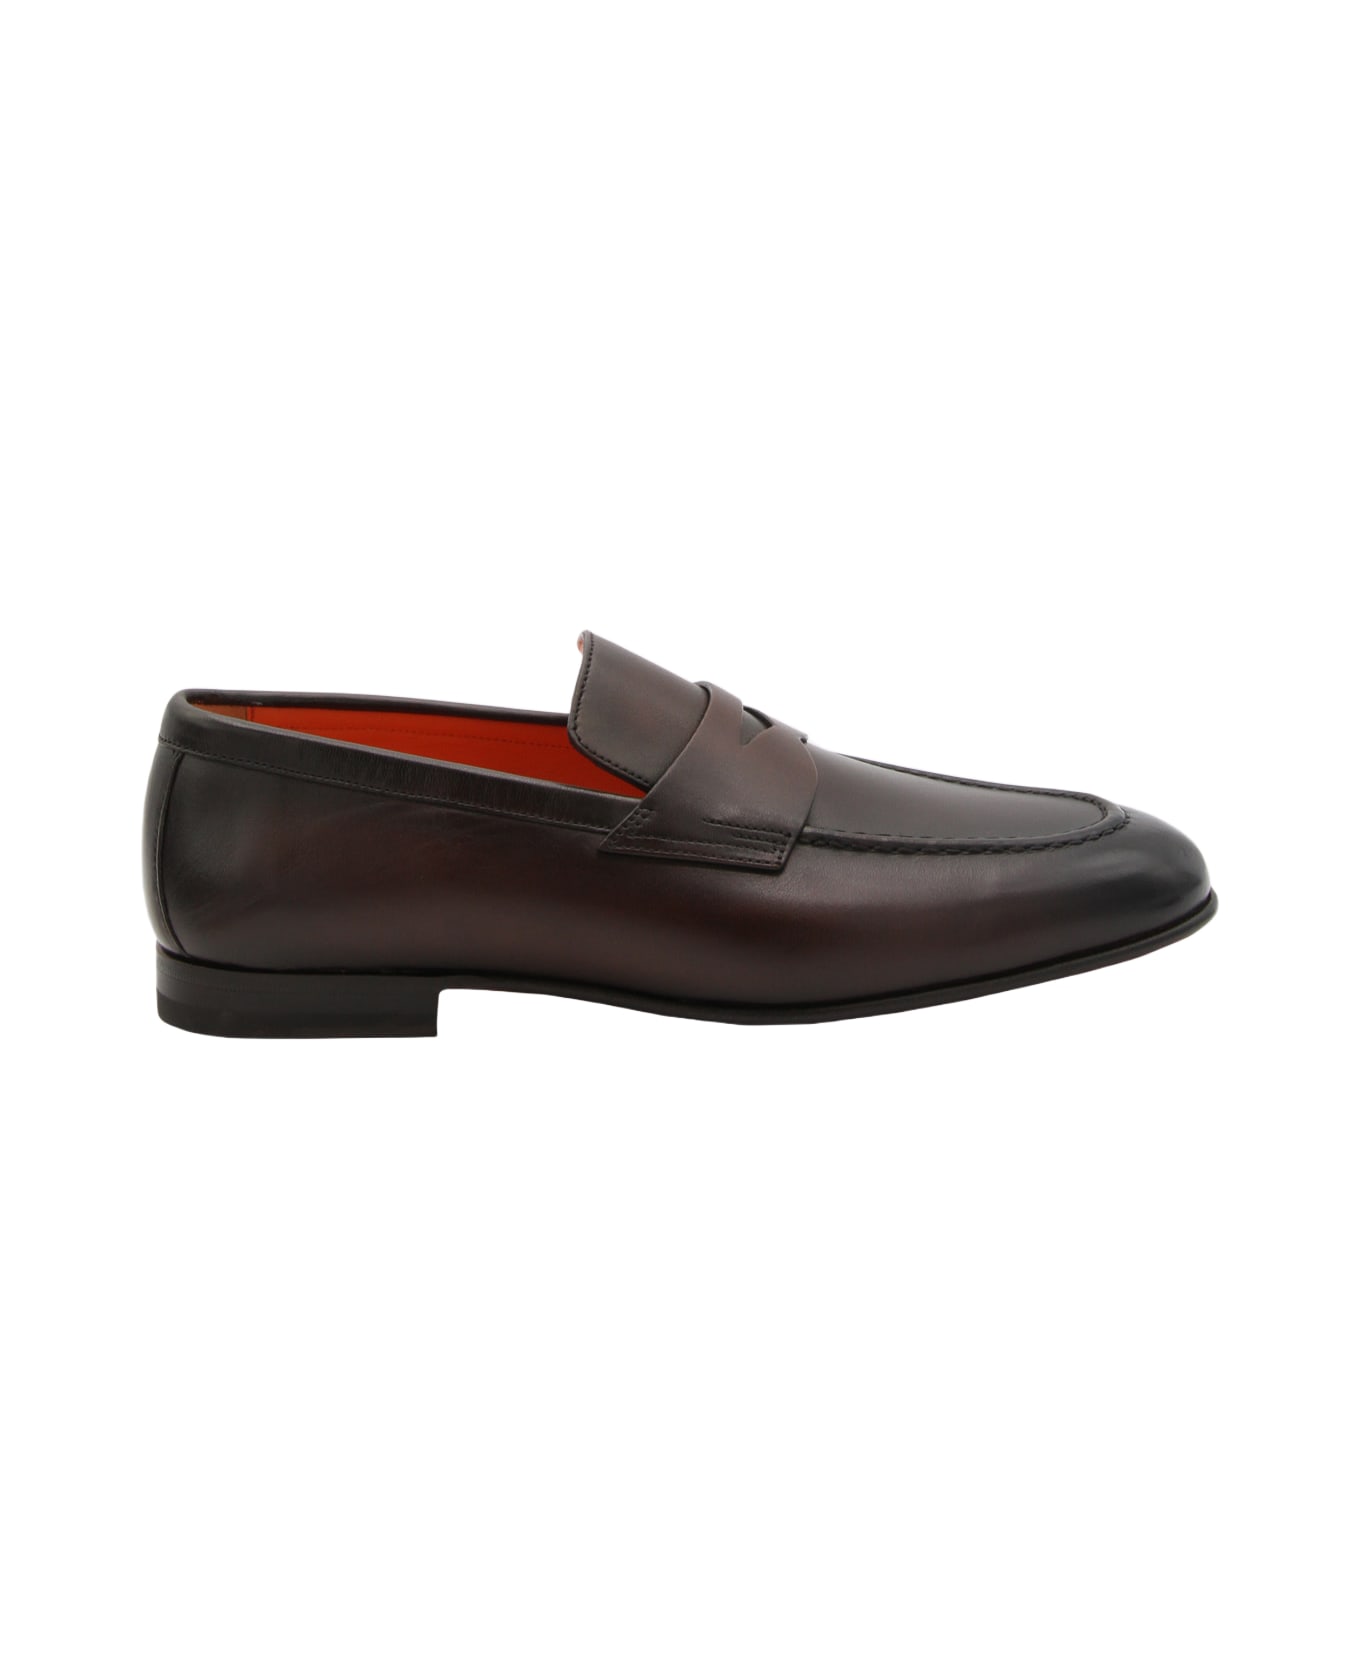 Santoni Brown Leather Loafers - Brown